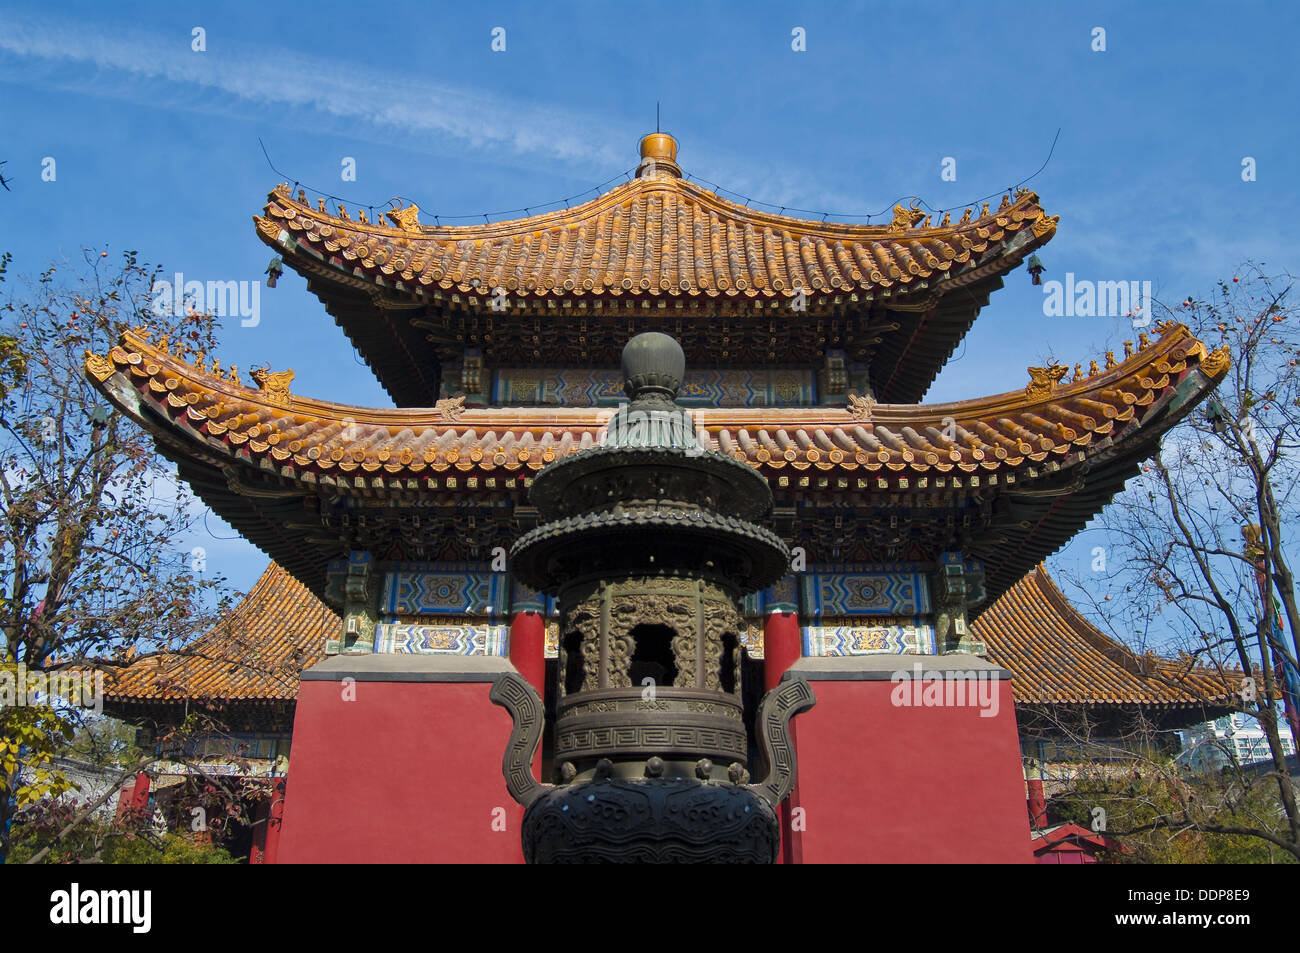 Quemador de incienso Lamasterio Yonghe Gong P R China de Beijing Foto de stock